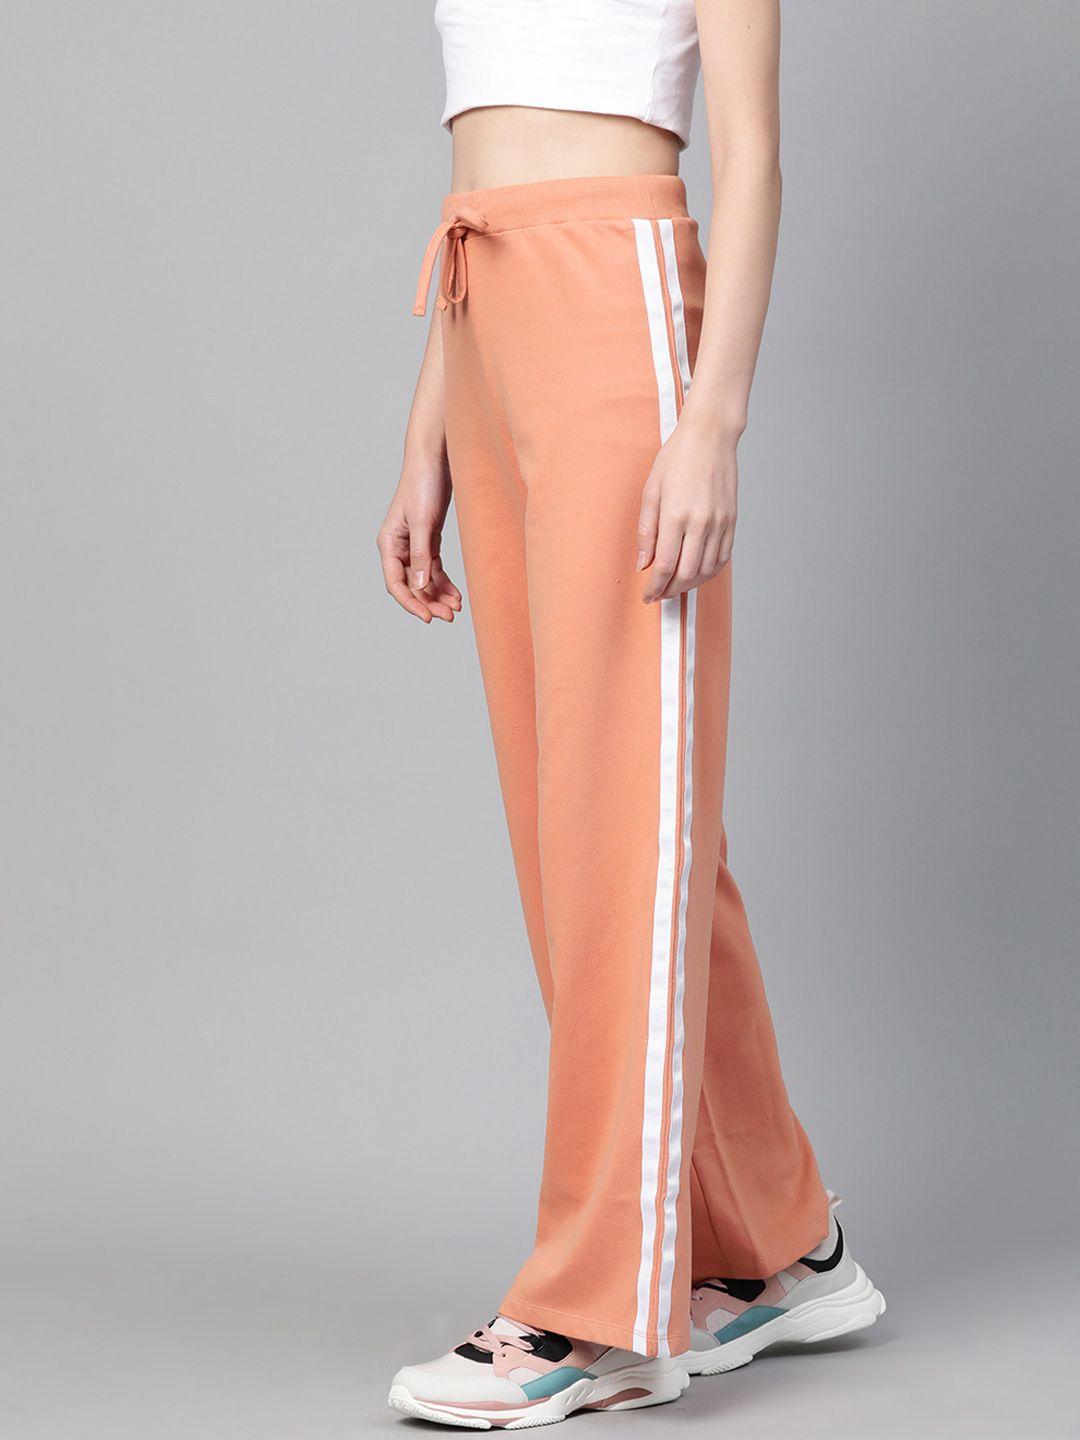 sassafras-women-peach-coloured-side-striped-wide-leg-track-pants